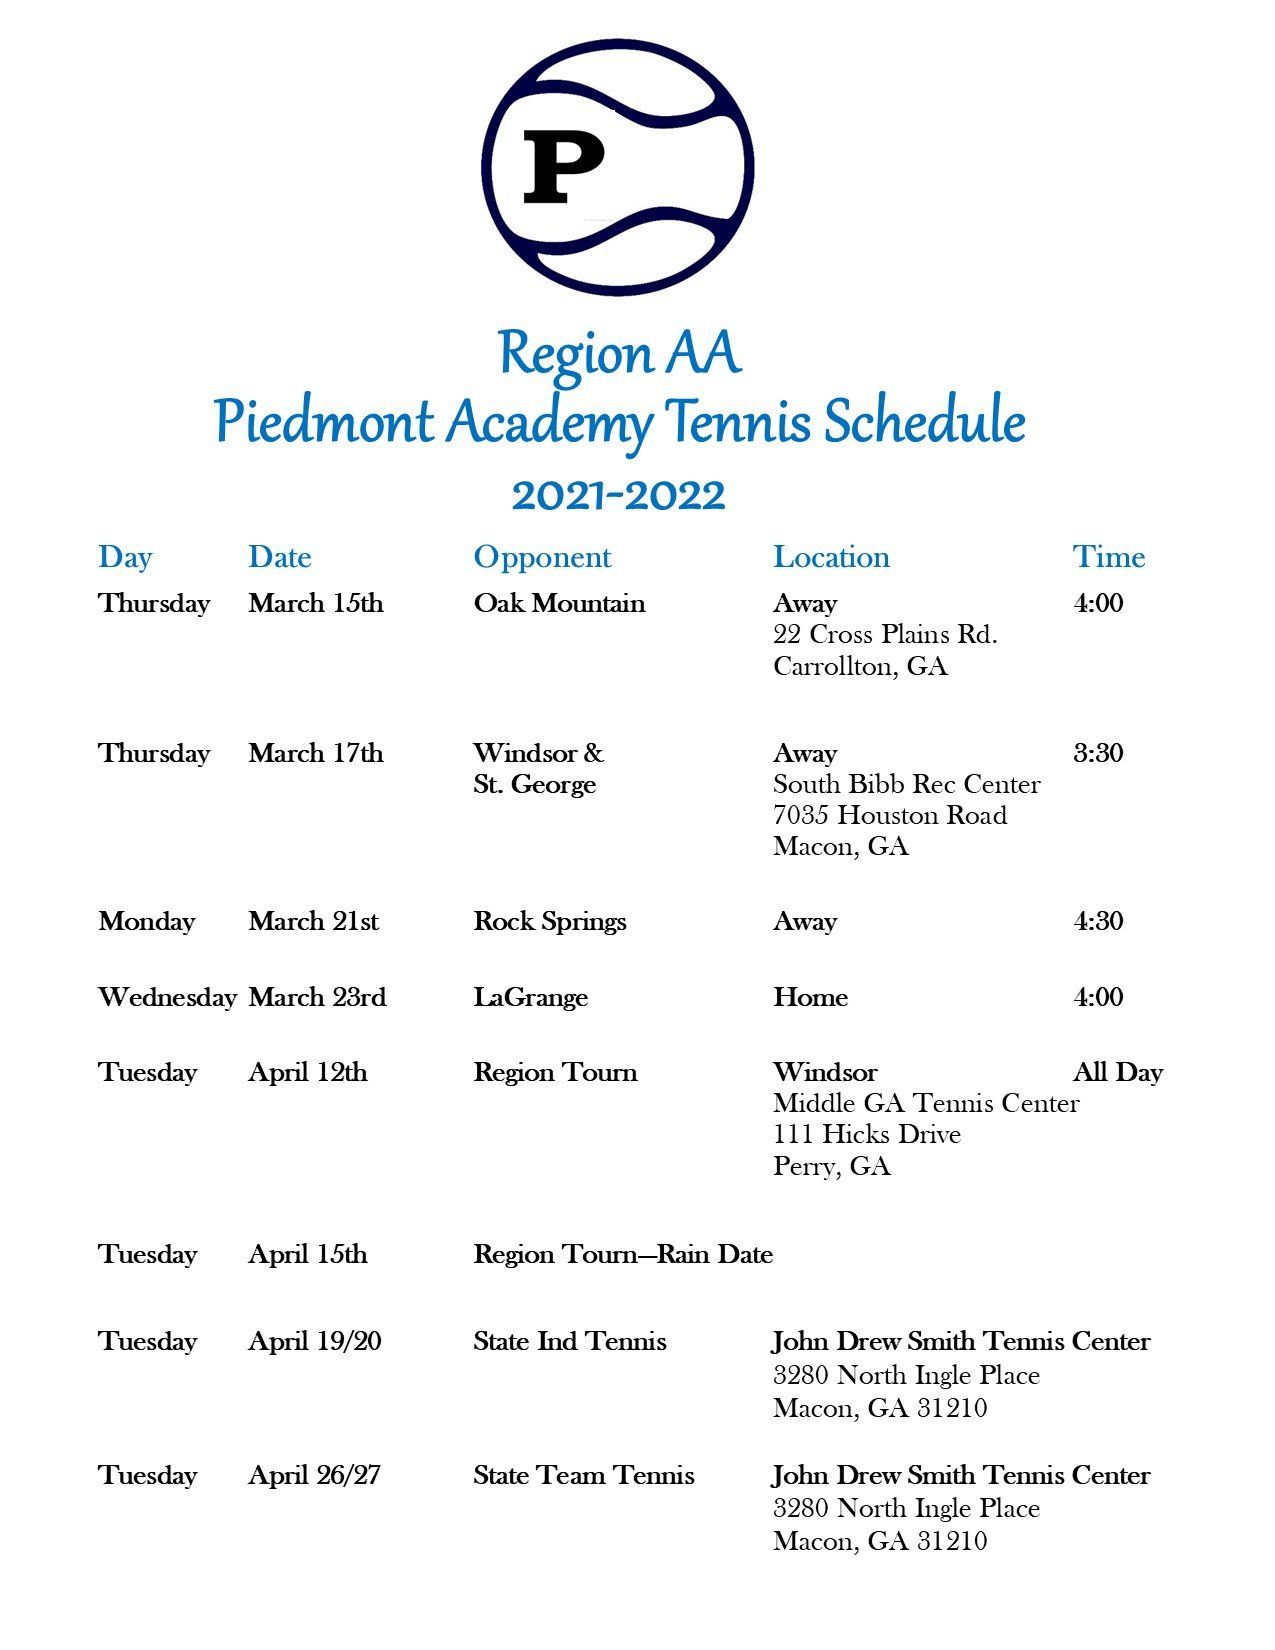 a region aa piedmont academy tennis schedule for the 2021-2022 school year .